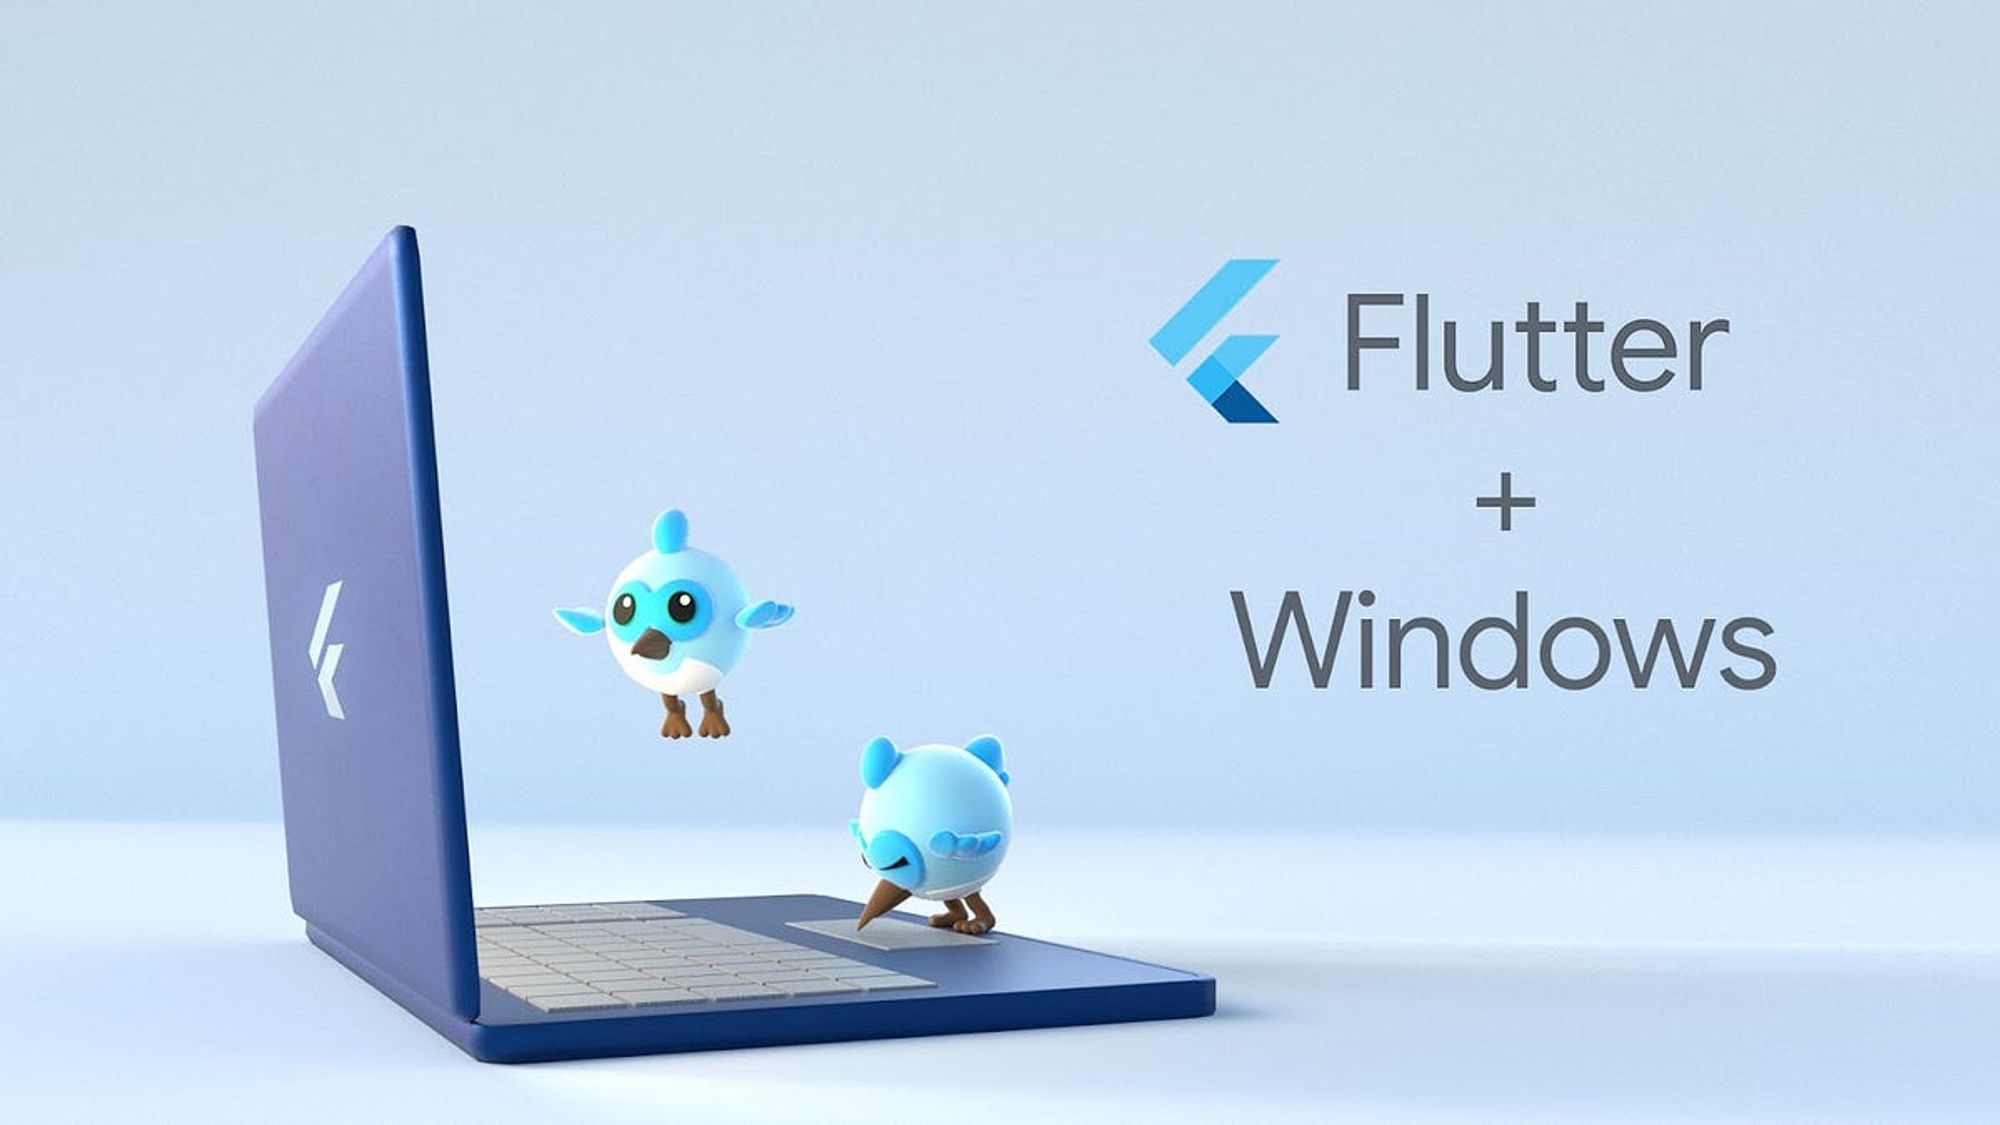 Announcing Flutter for Windows